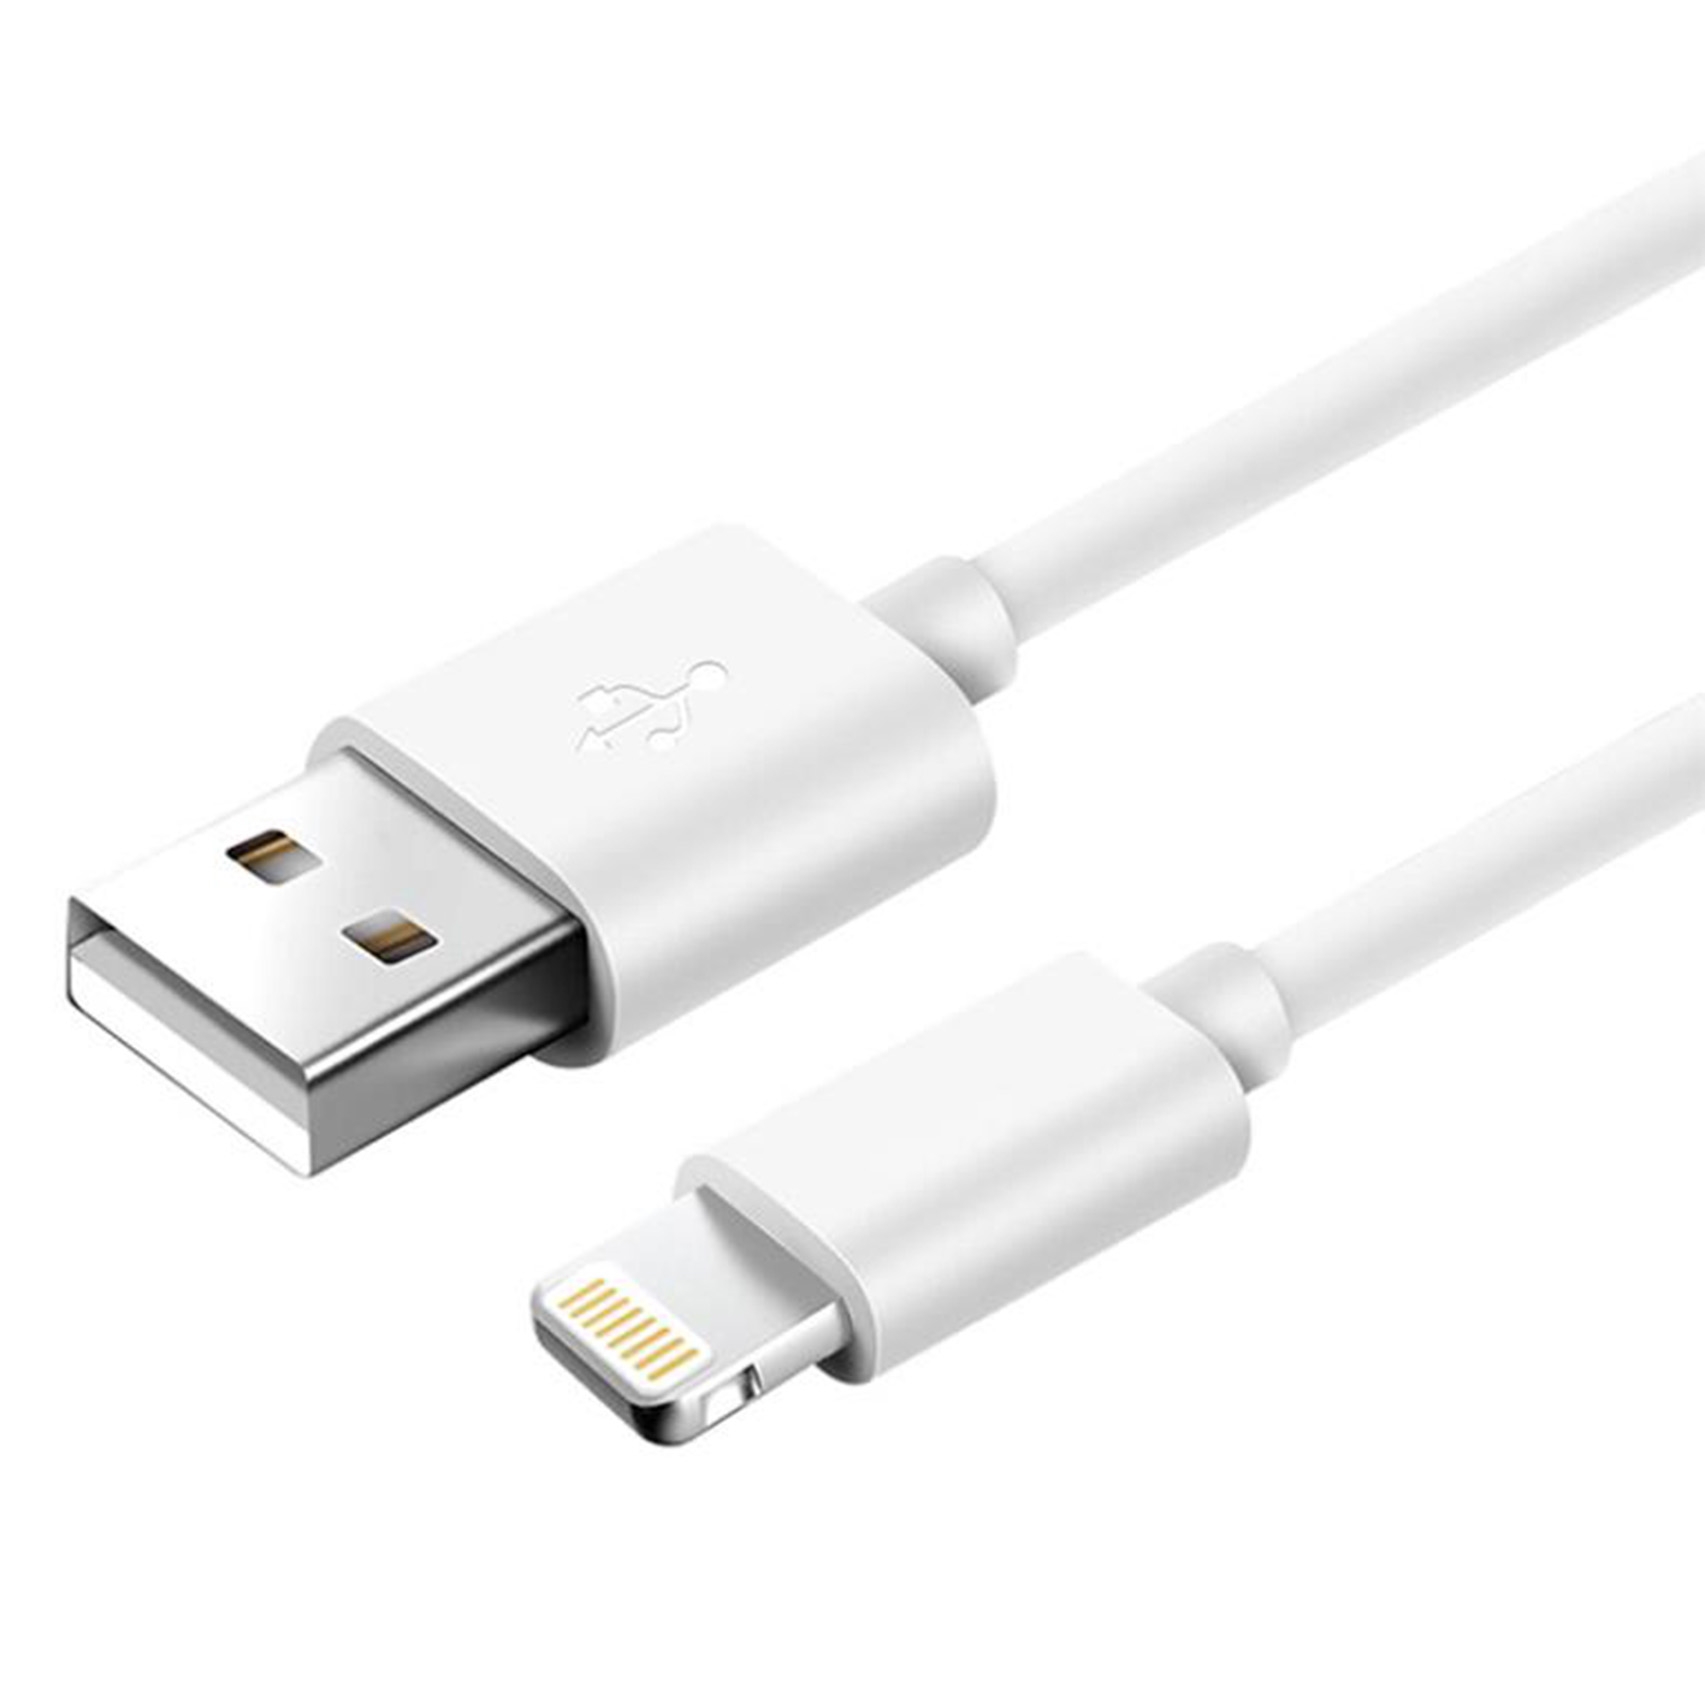 3x iPhone SE 2020 Lightning auf USB Kabel 1m Ladekabel